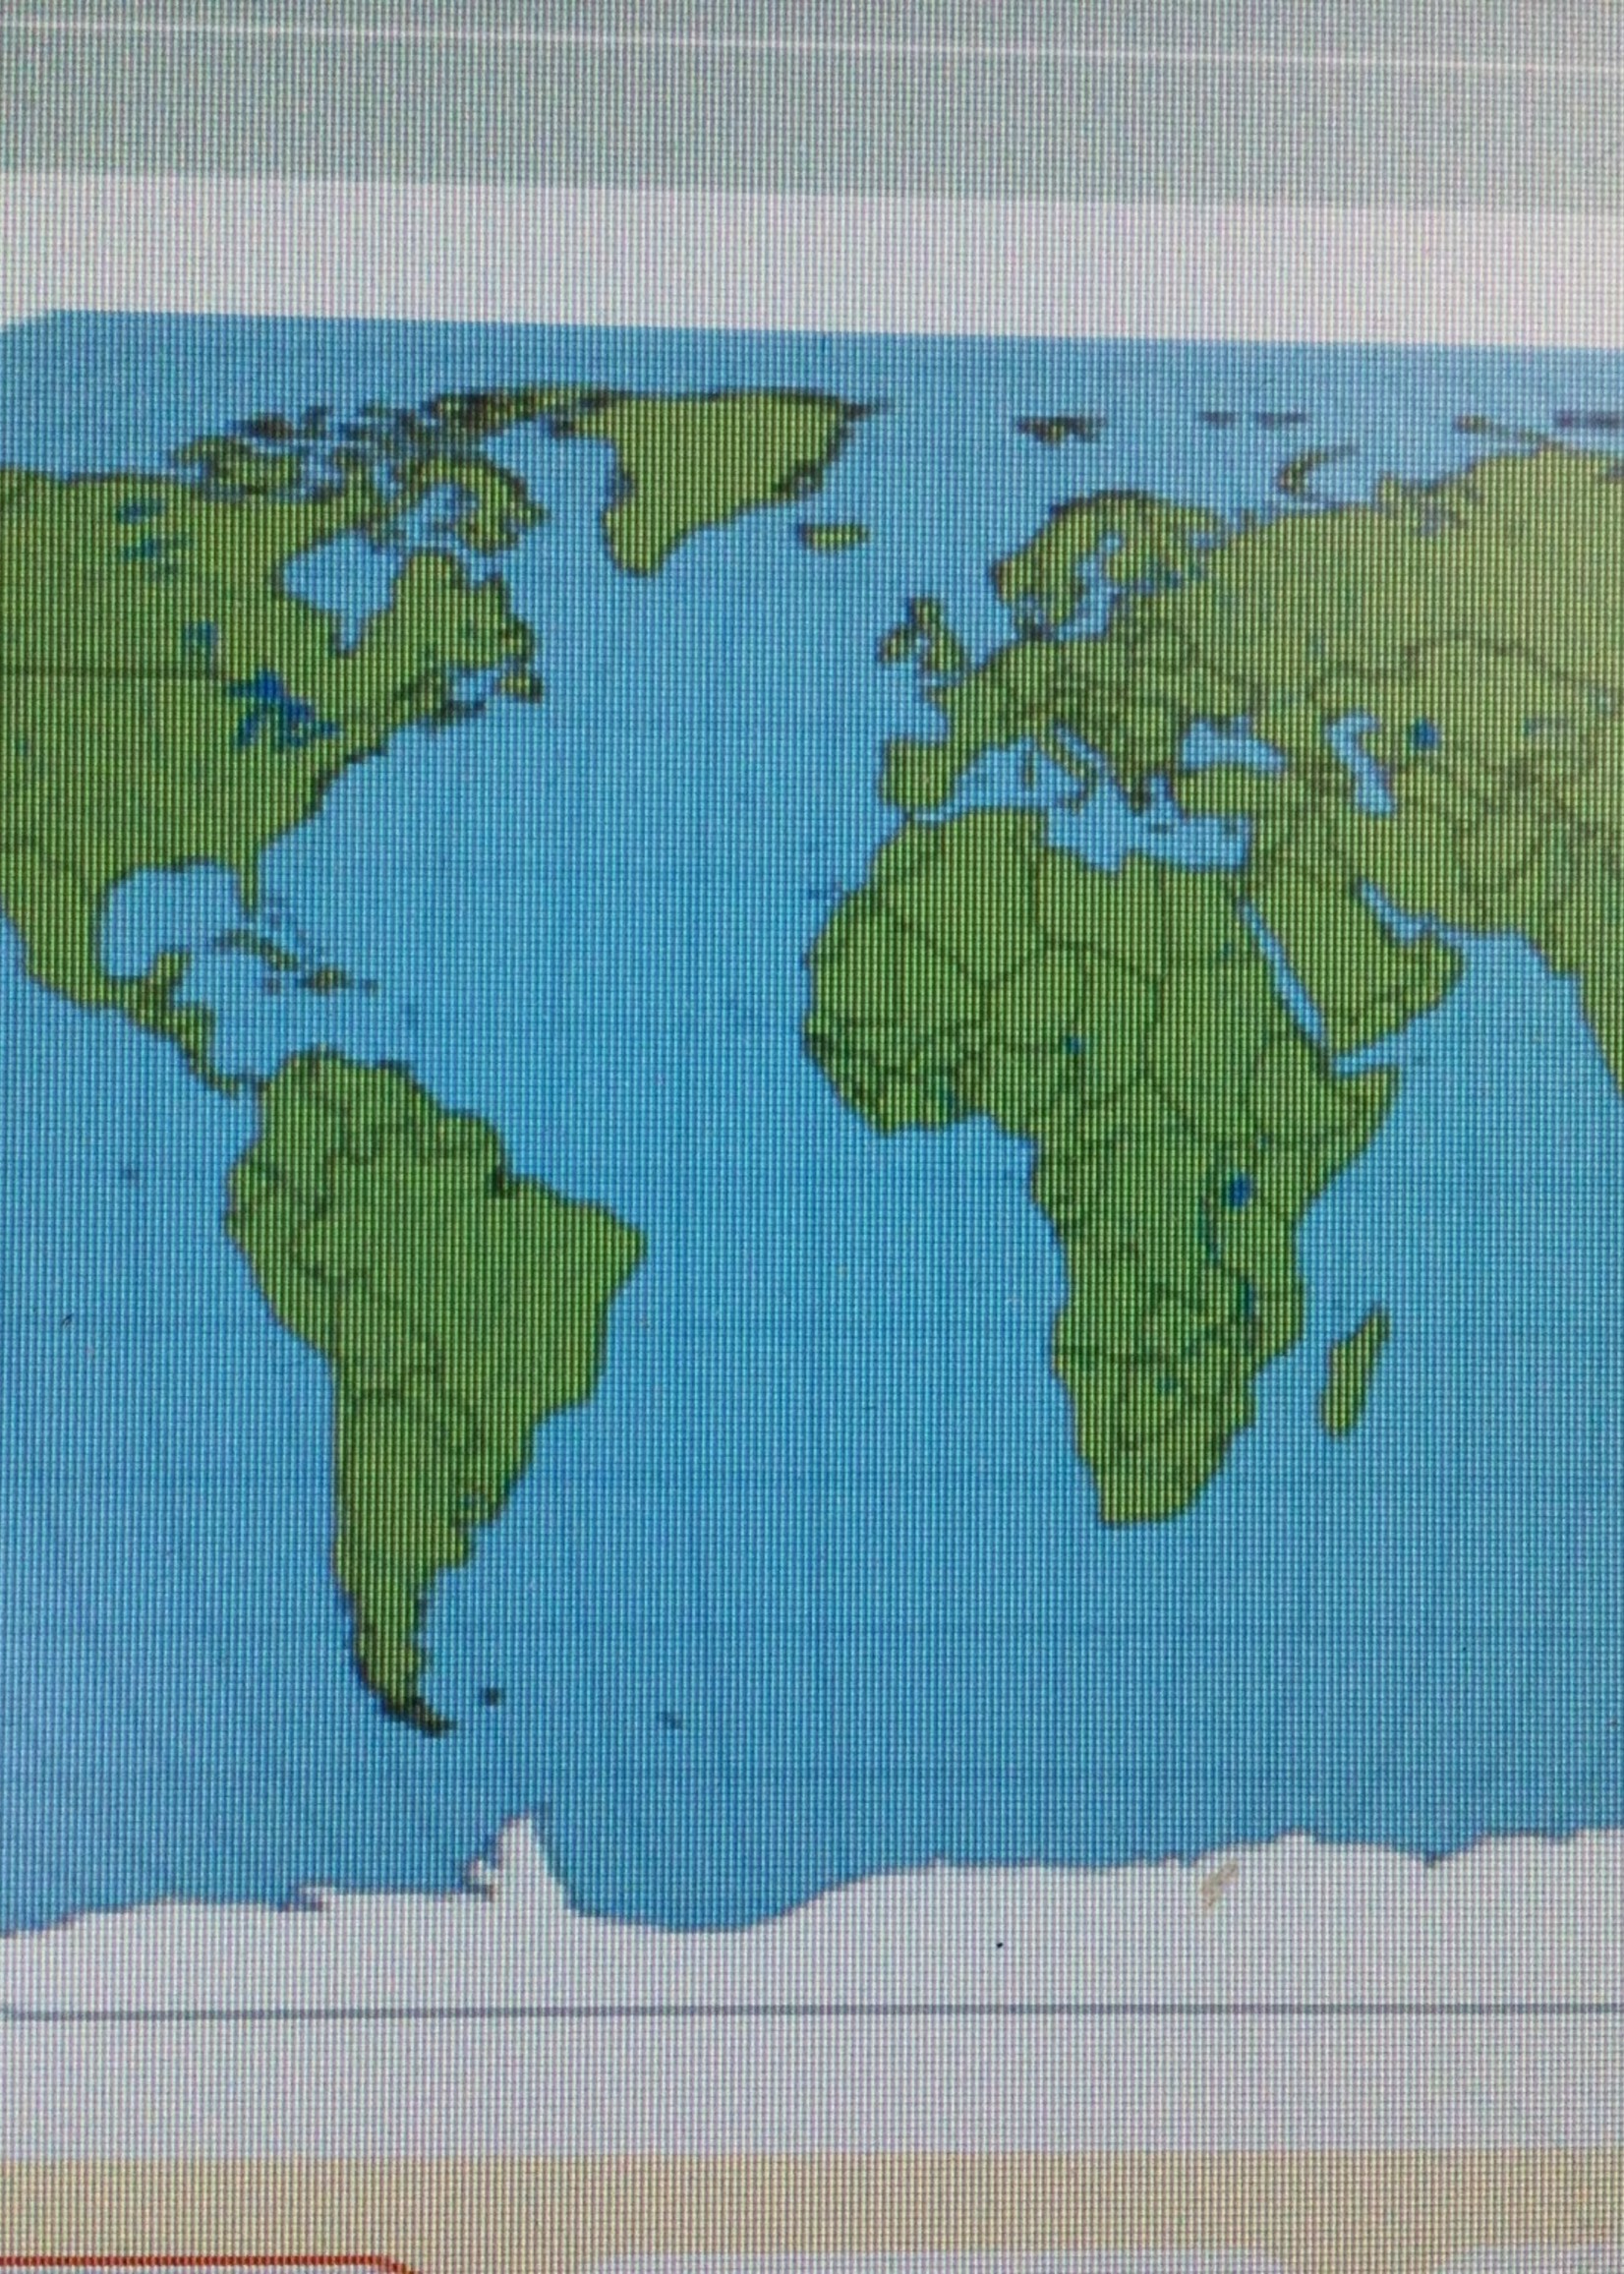 Unlabeled World Practice Map 30 pk